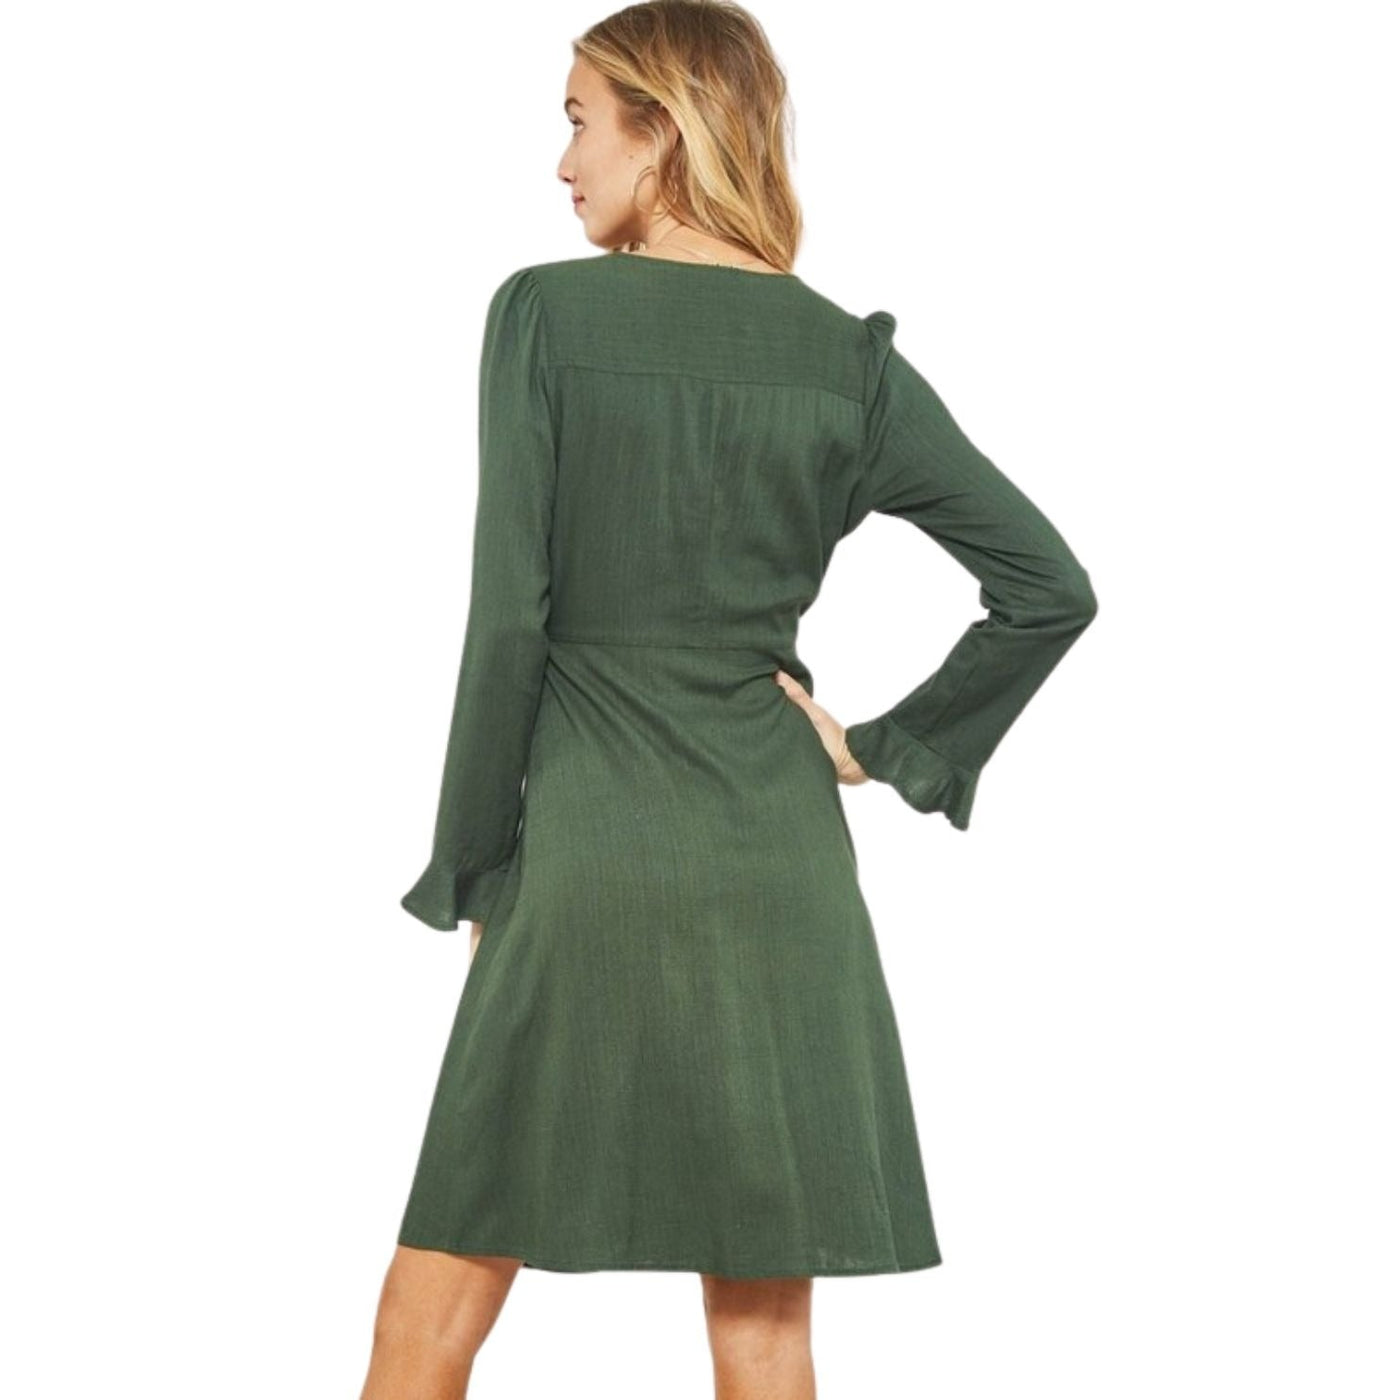 Promesa Green Scoop Neck Puff-Sleeve Ruffled Mini Dress HDE8359-GREEN